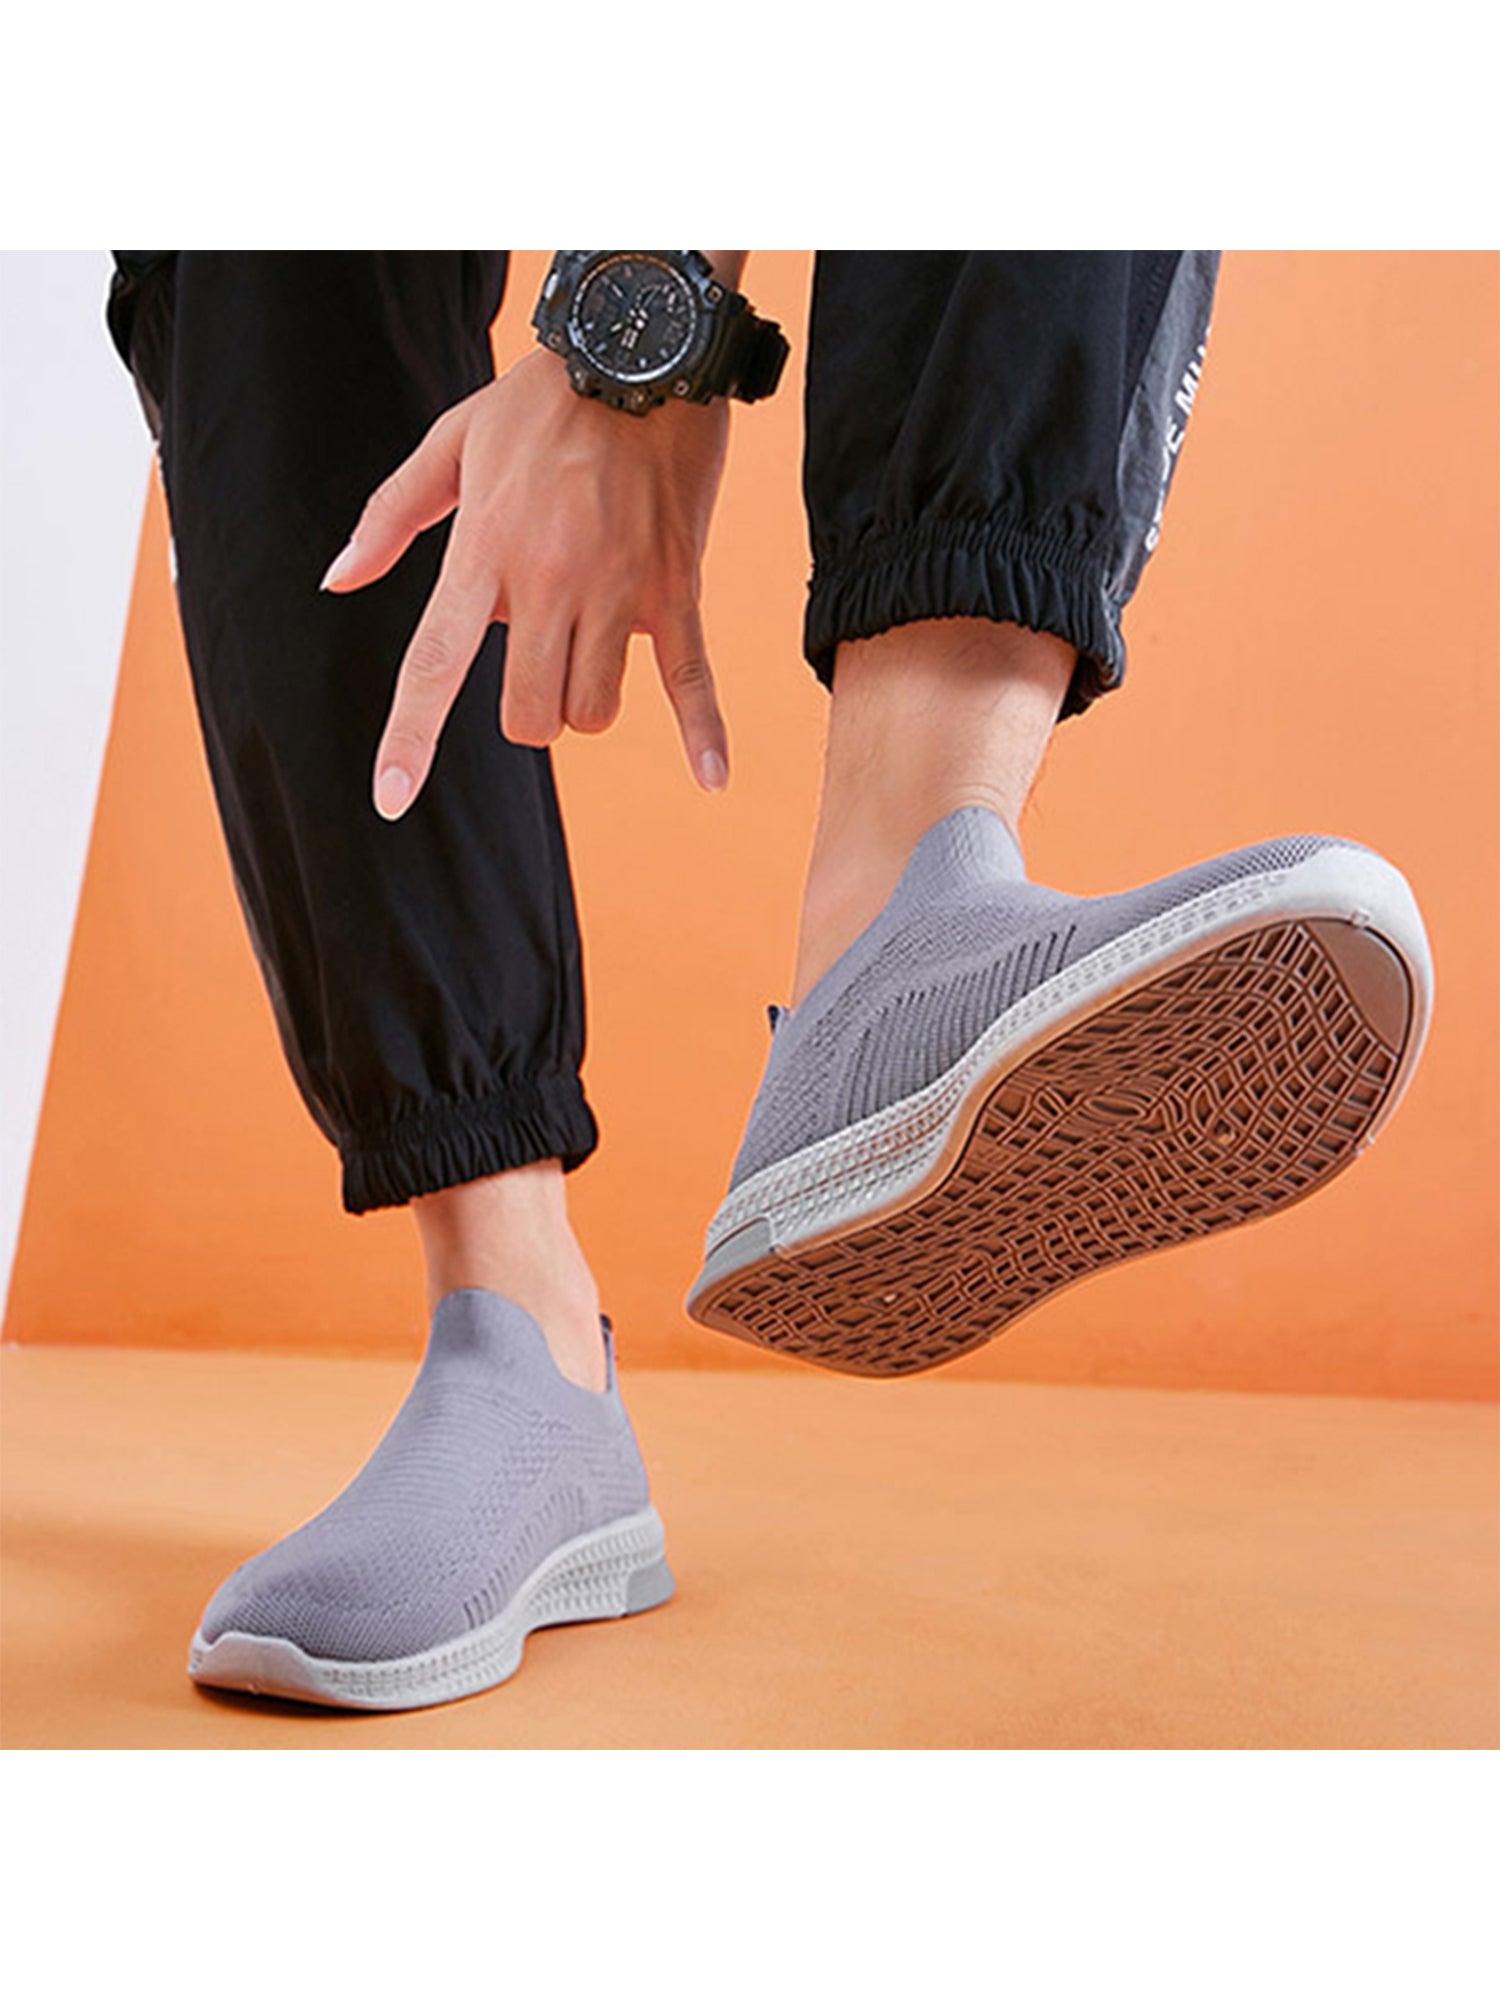 Men Sock Shoes Breathable Slip On Sneakers